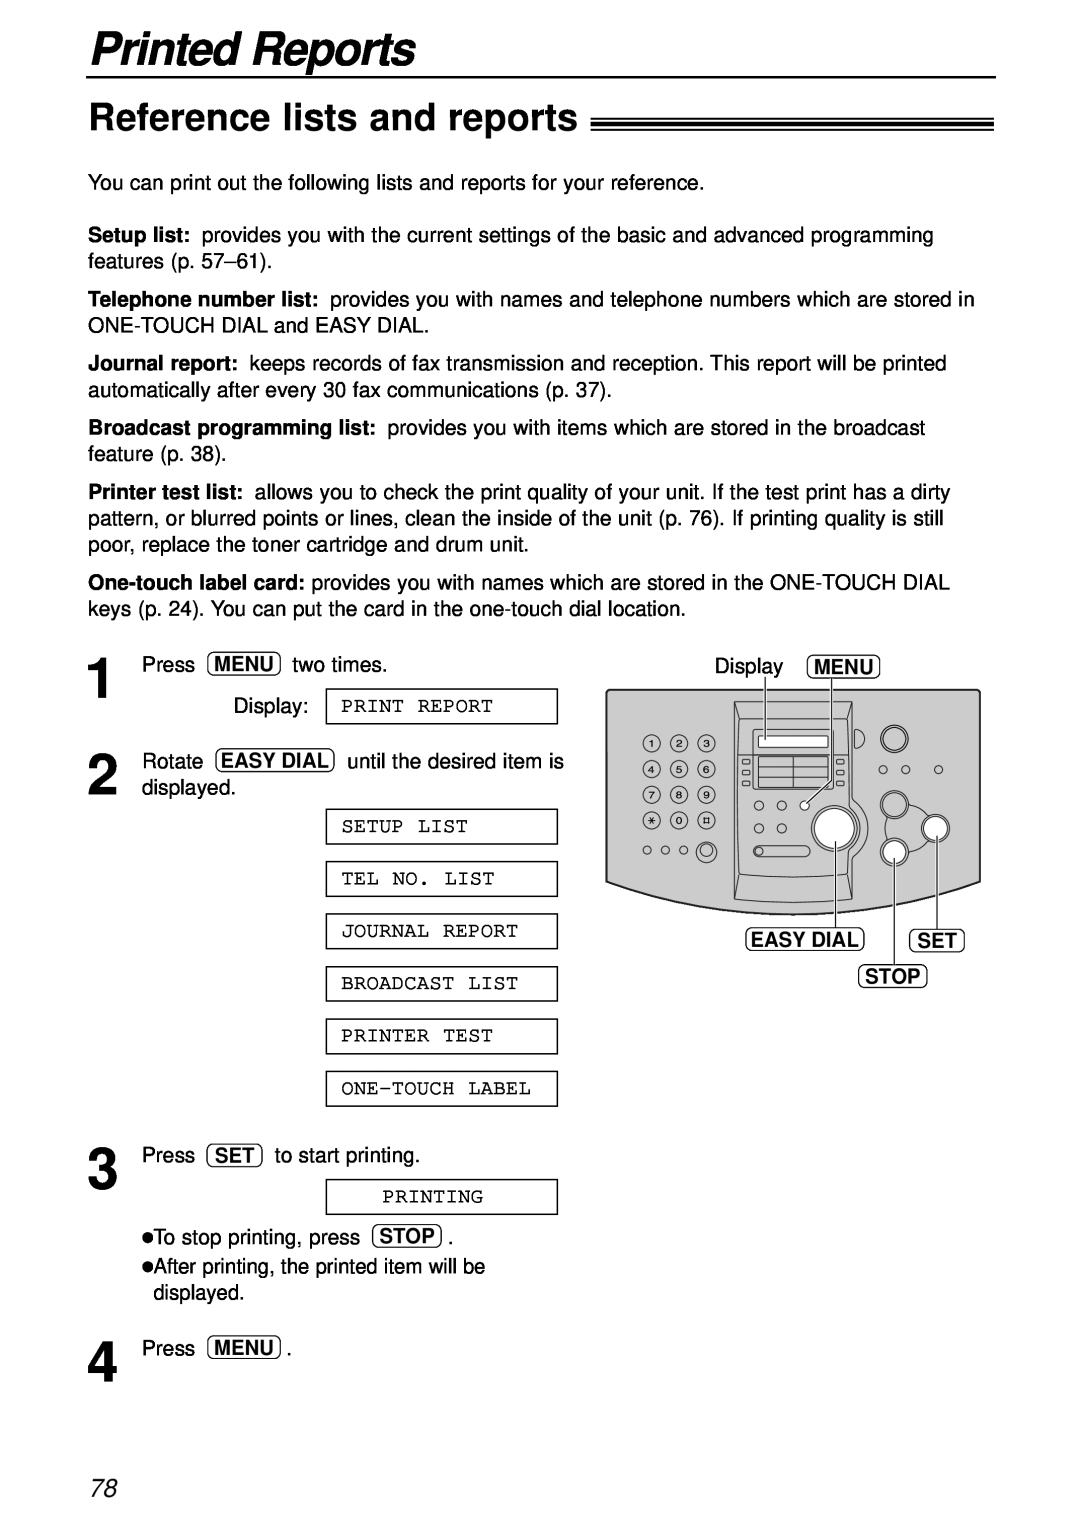 Panasonic KX-FL501AL, KX-FL501NZ manual Printed Reports, Reference lists and reports, Menu, Easy Dial, Stop 